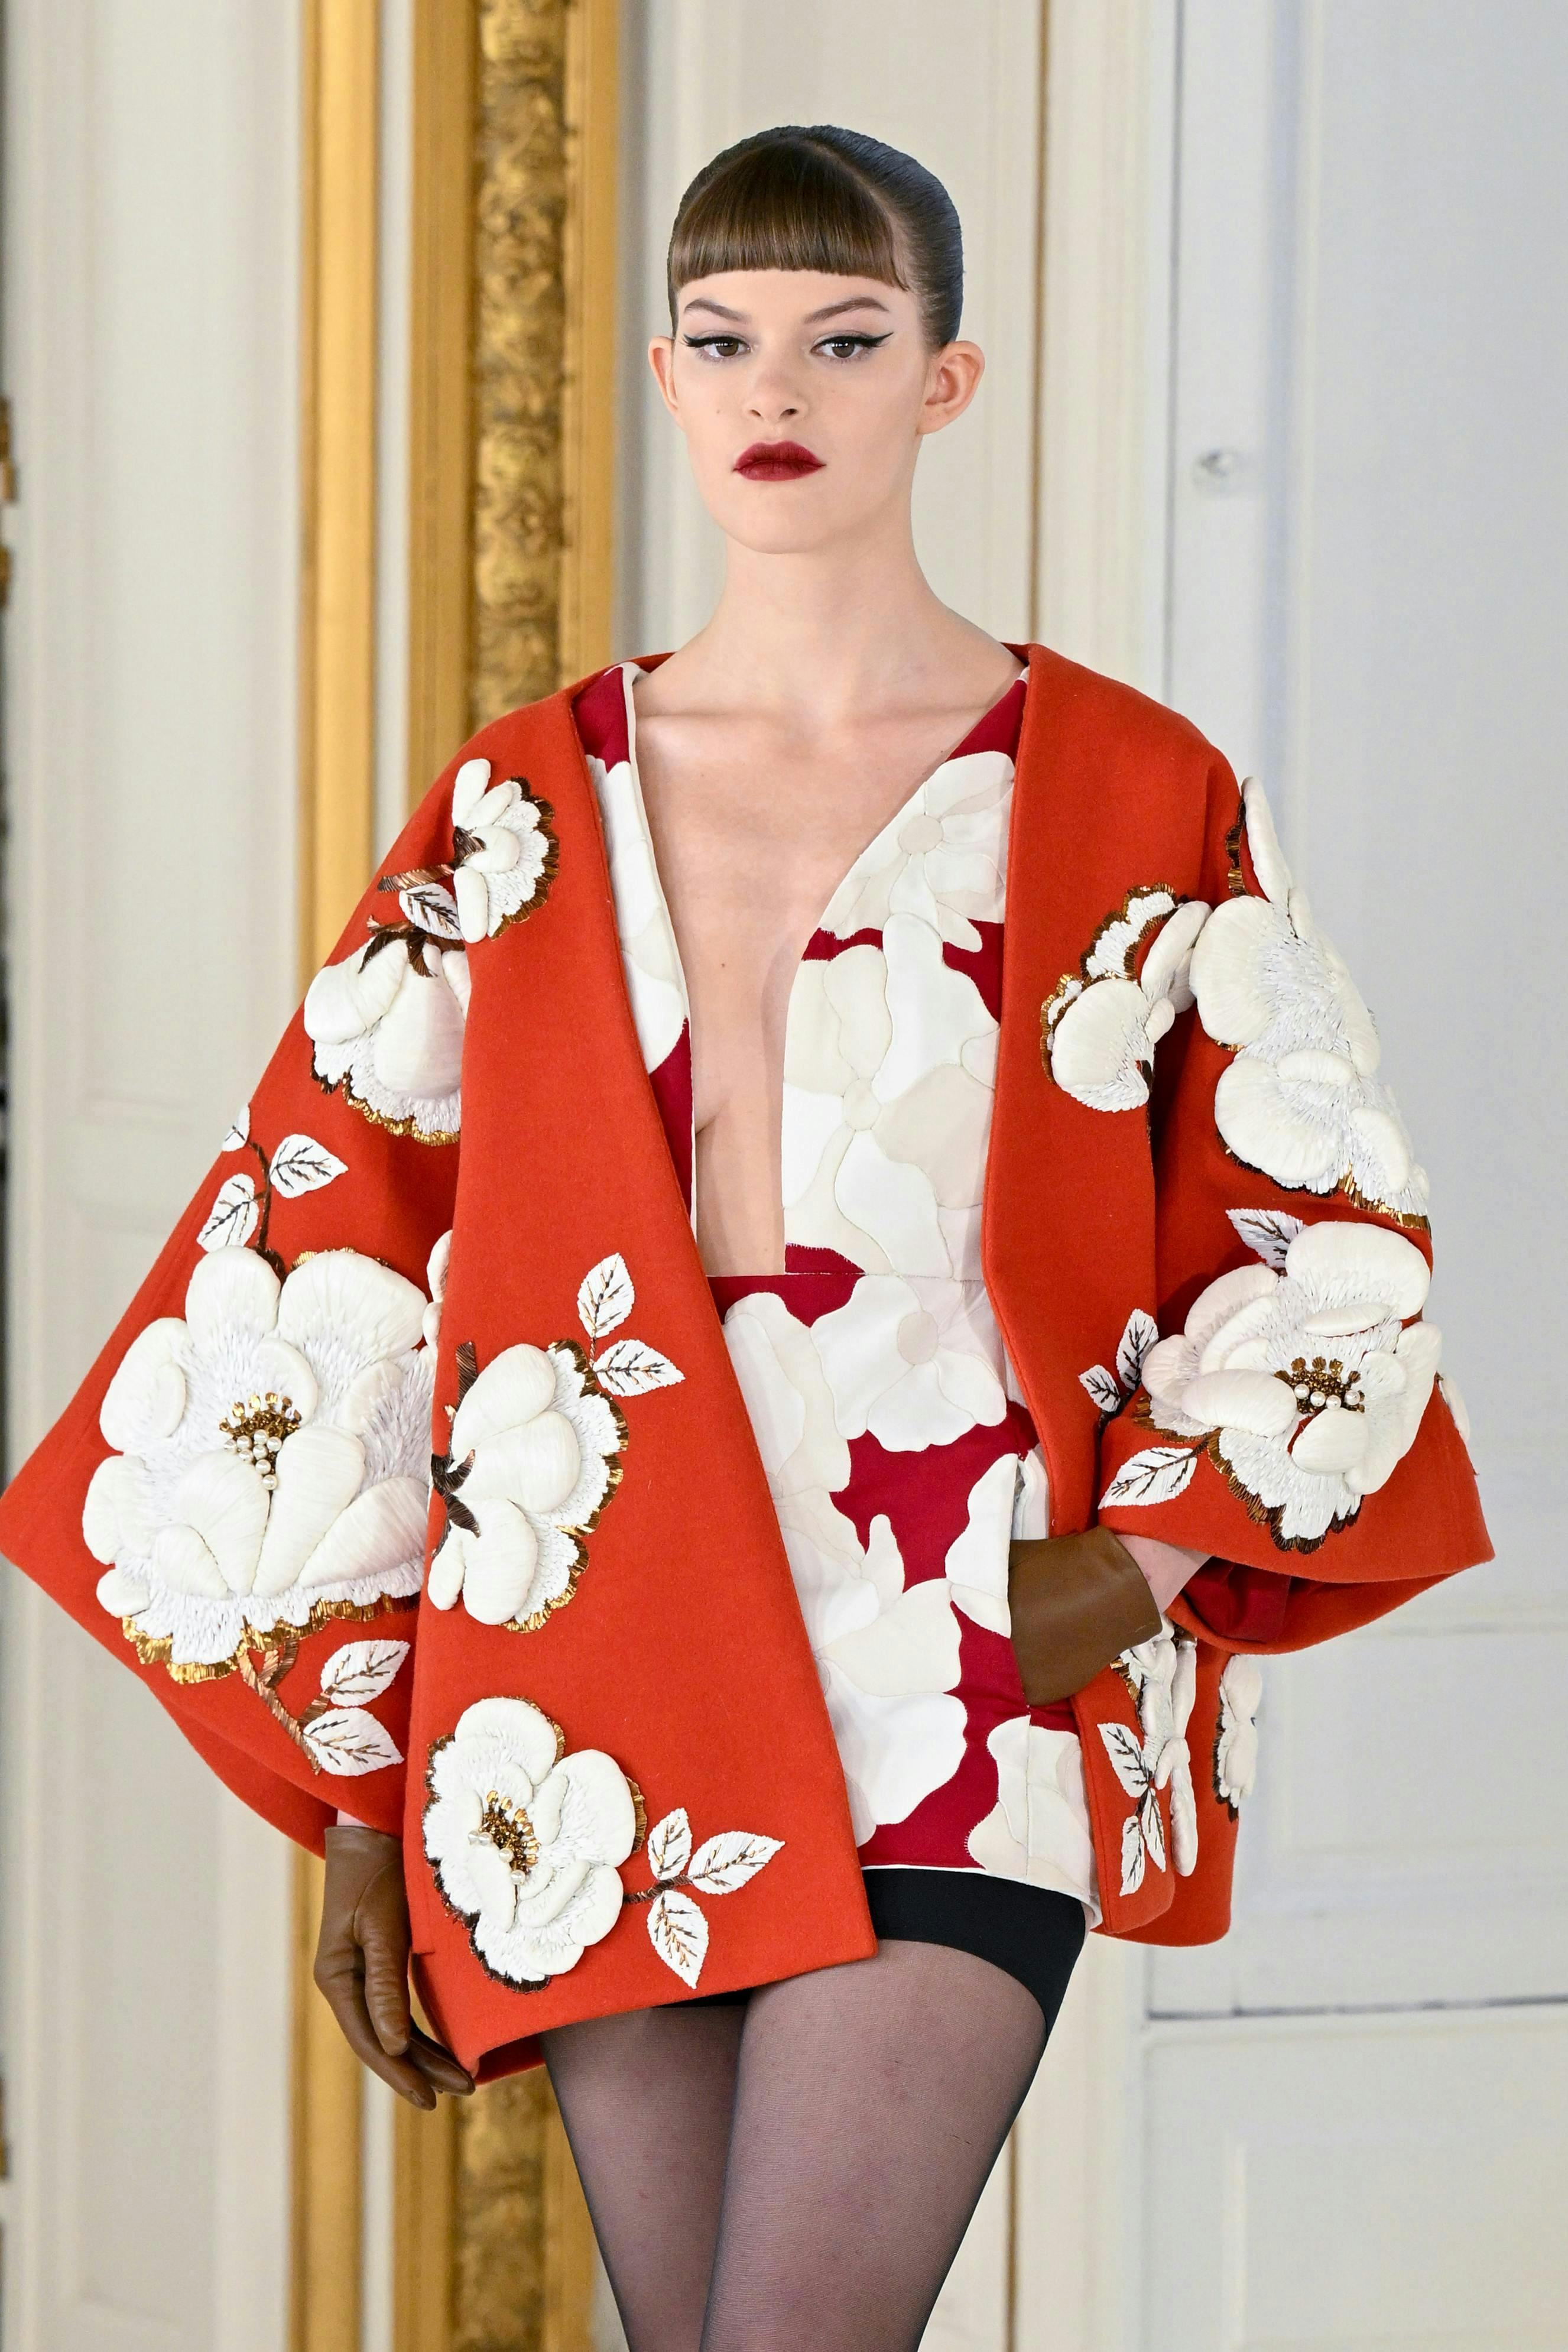 paris clothing apparel robe fashion gown kimono person human